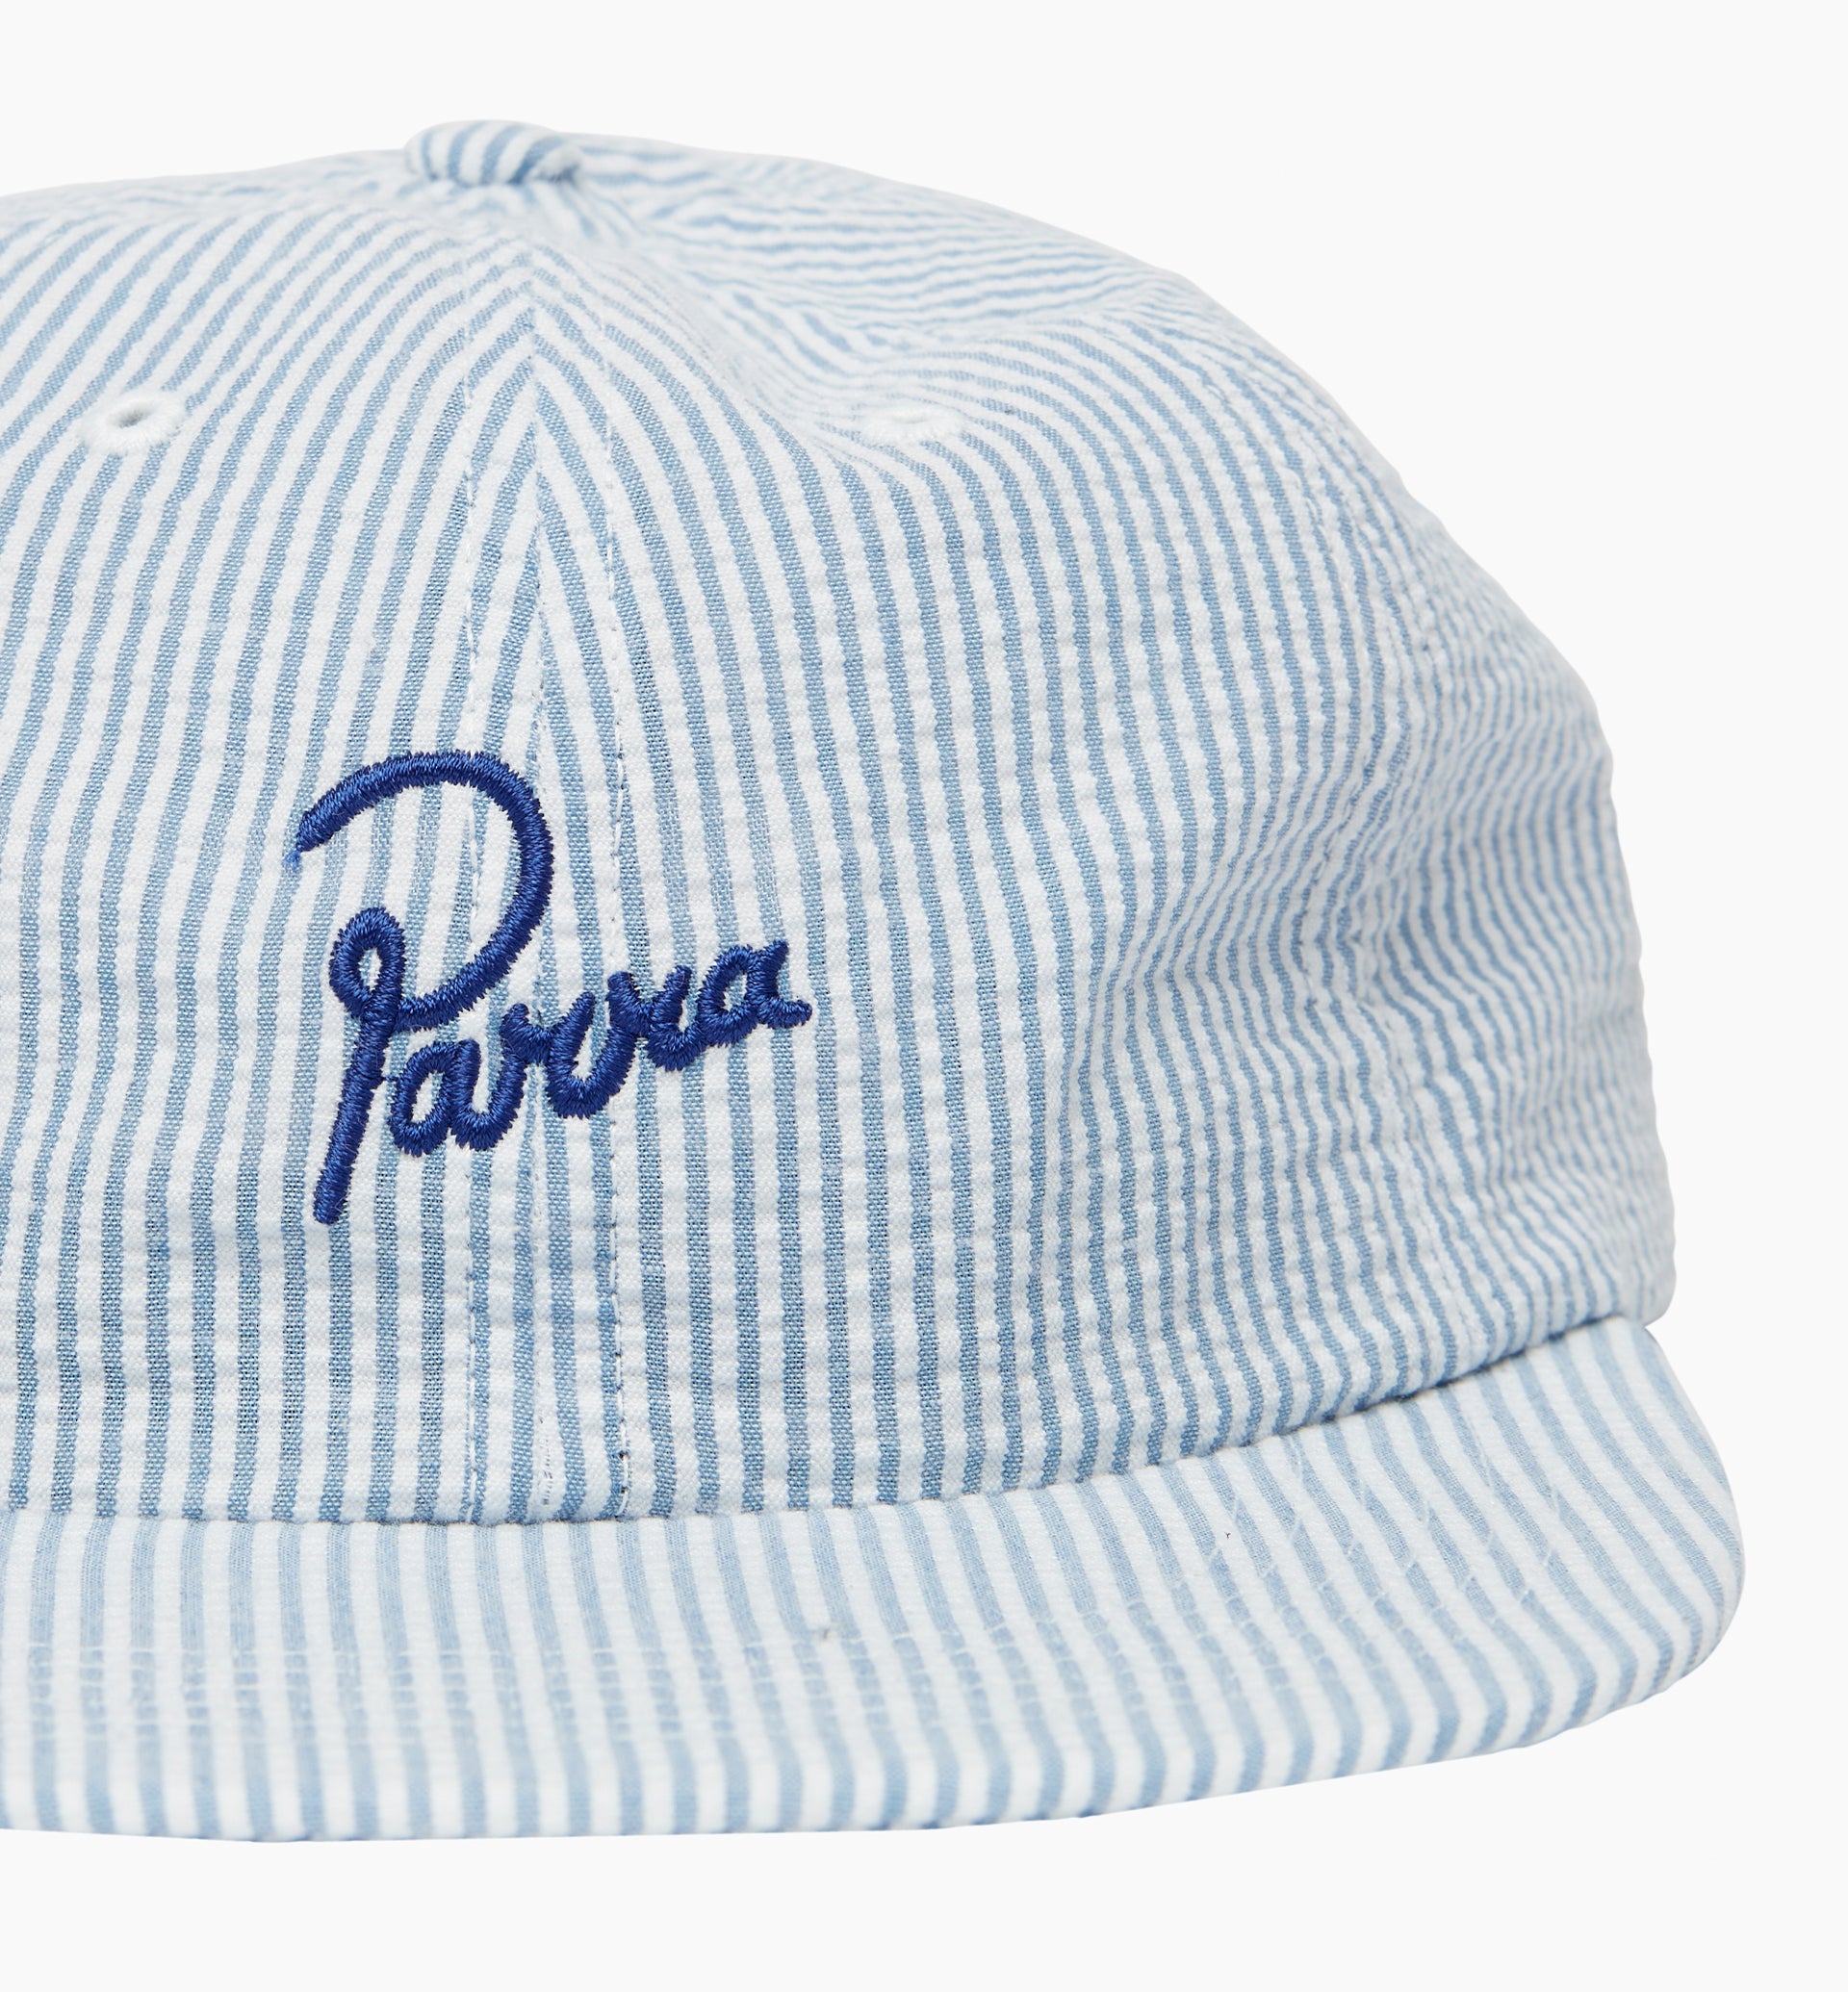 Parra - classic logo 6 panel hat